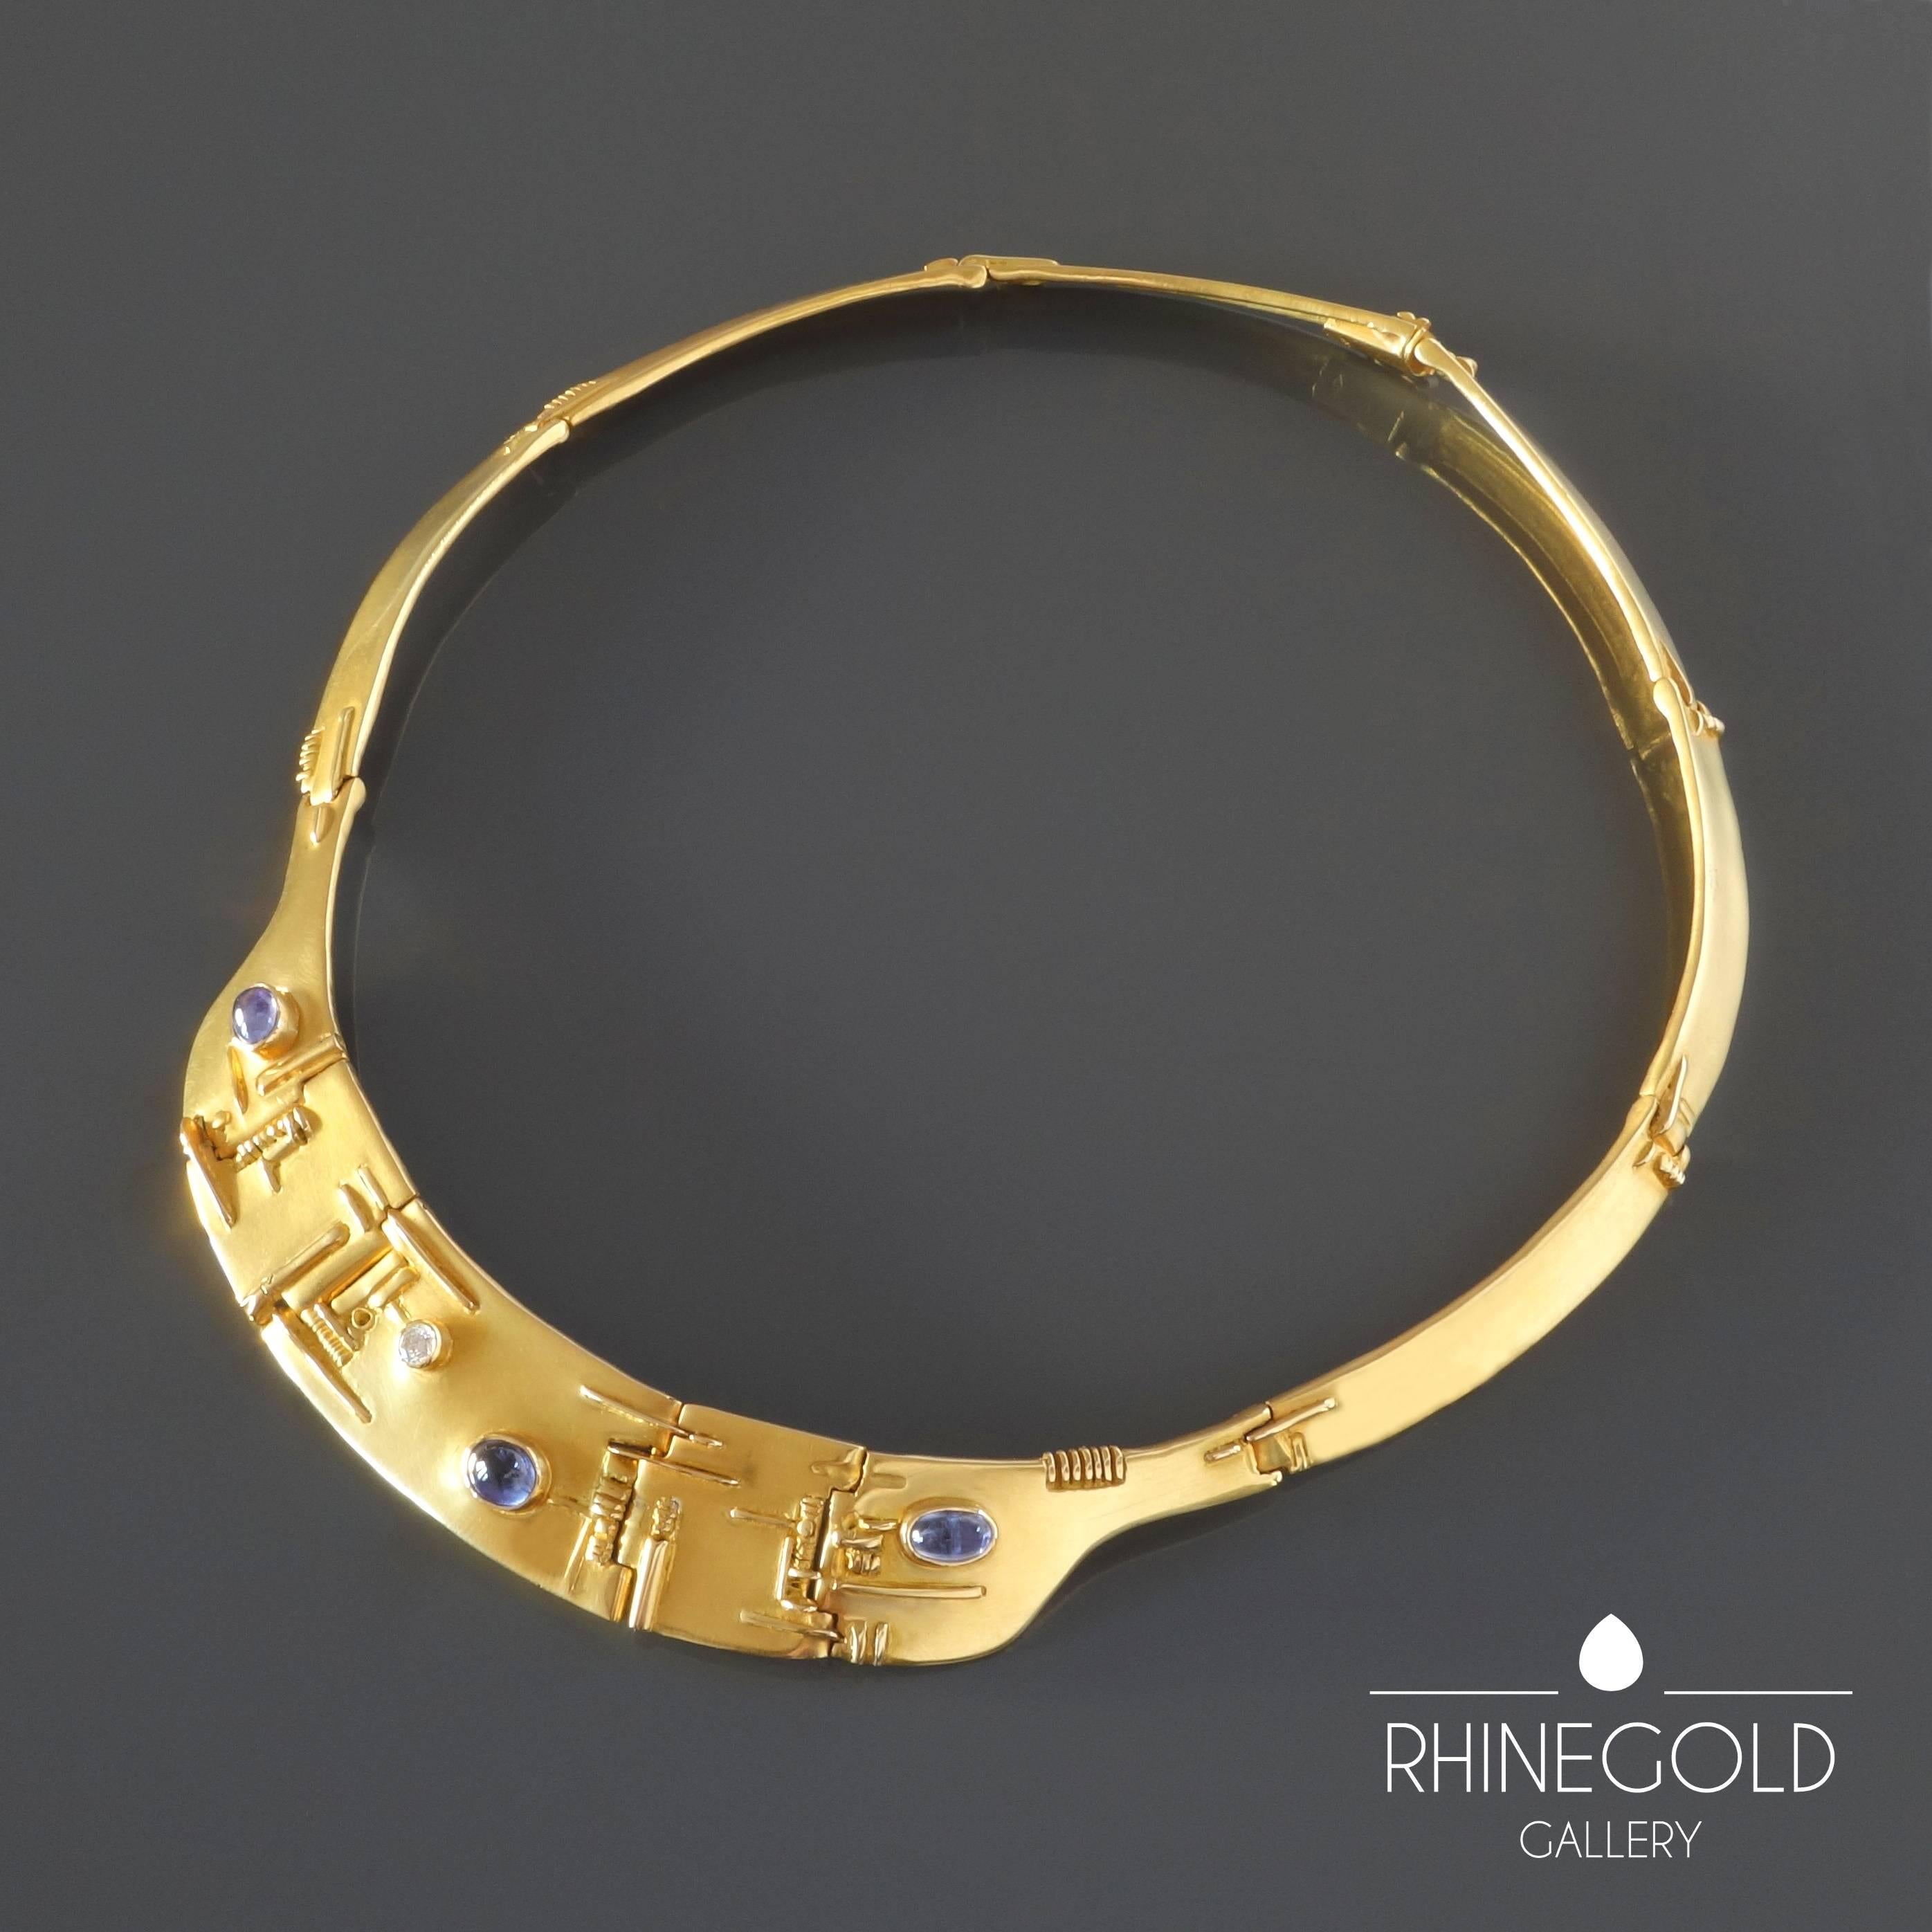 Fernand Demaret: Unique Modernist Diamond Sapphire Gold Necklace 
18k yellow gold, 1 brilliant cut diamond of approx. 0.1 carat, 3 lavender-blue sapphire cabochons
Length ca. 40 cm (approx. 15 3/4”), Width (front)  1.7 cm (approx.  11